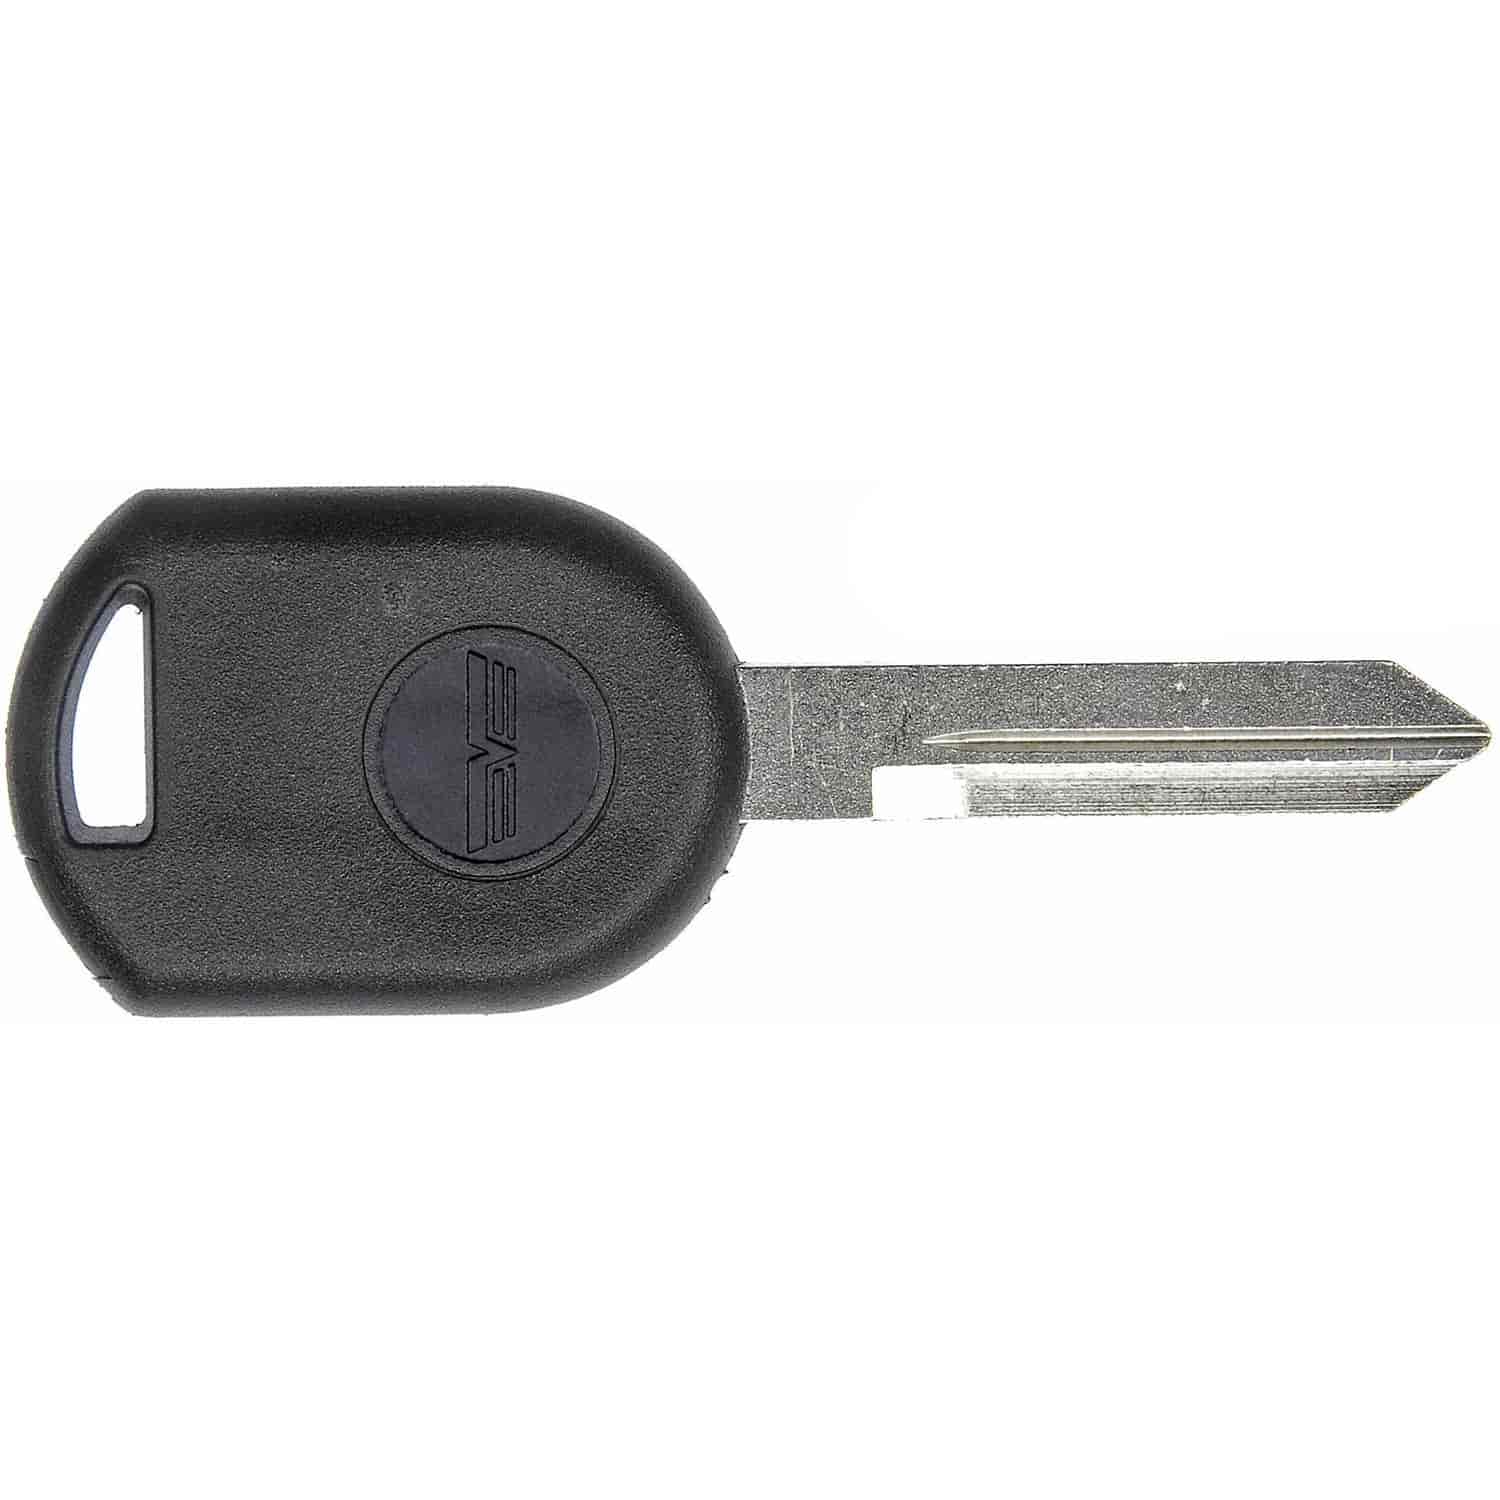 Ignition lock key with transponder